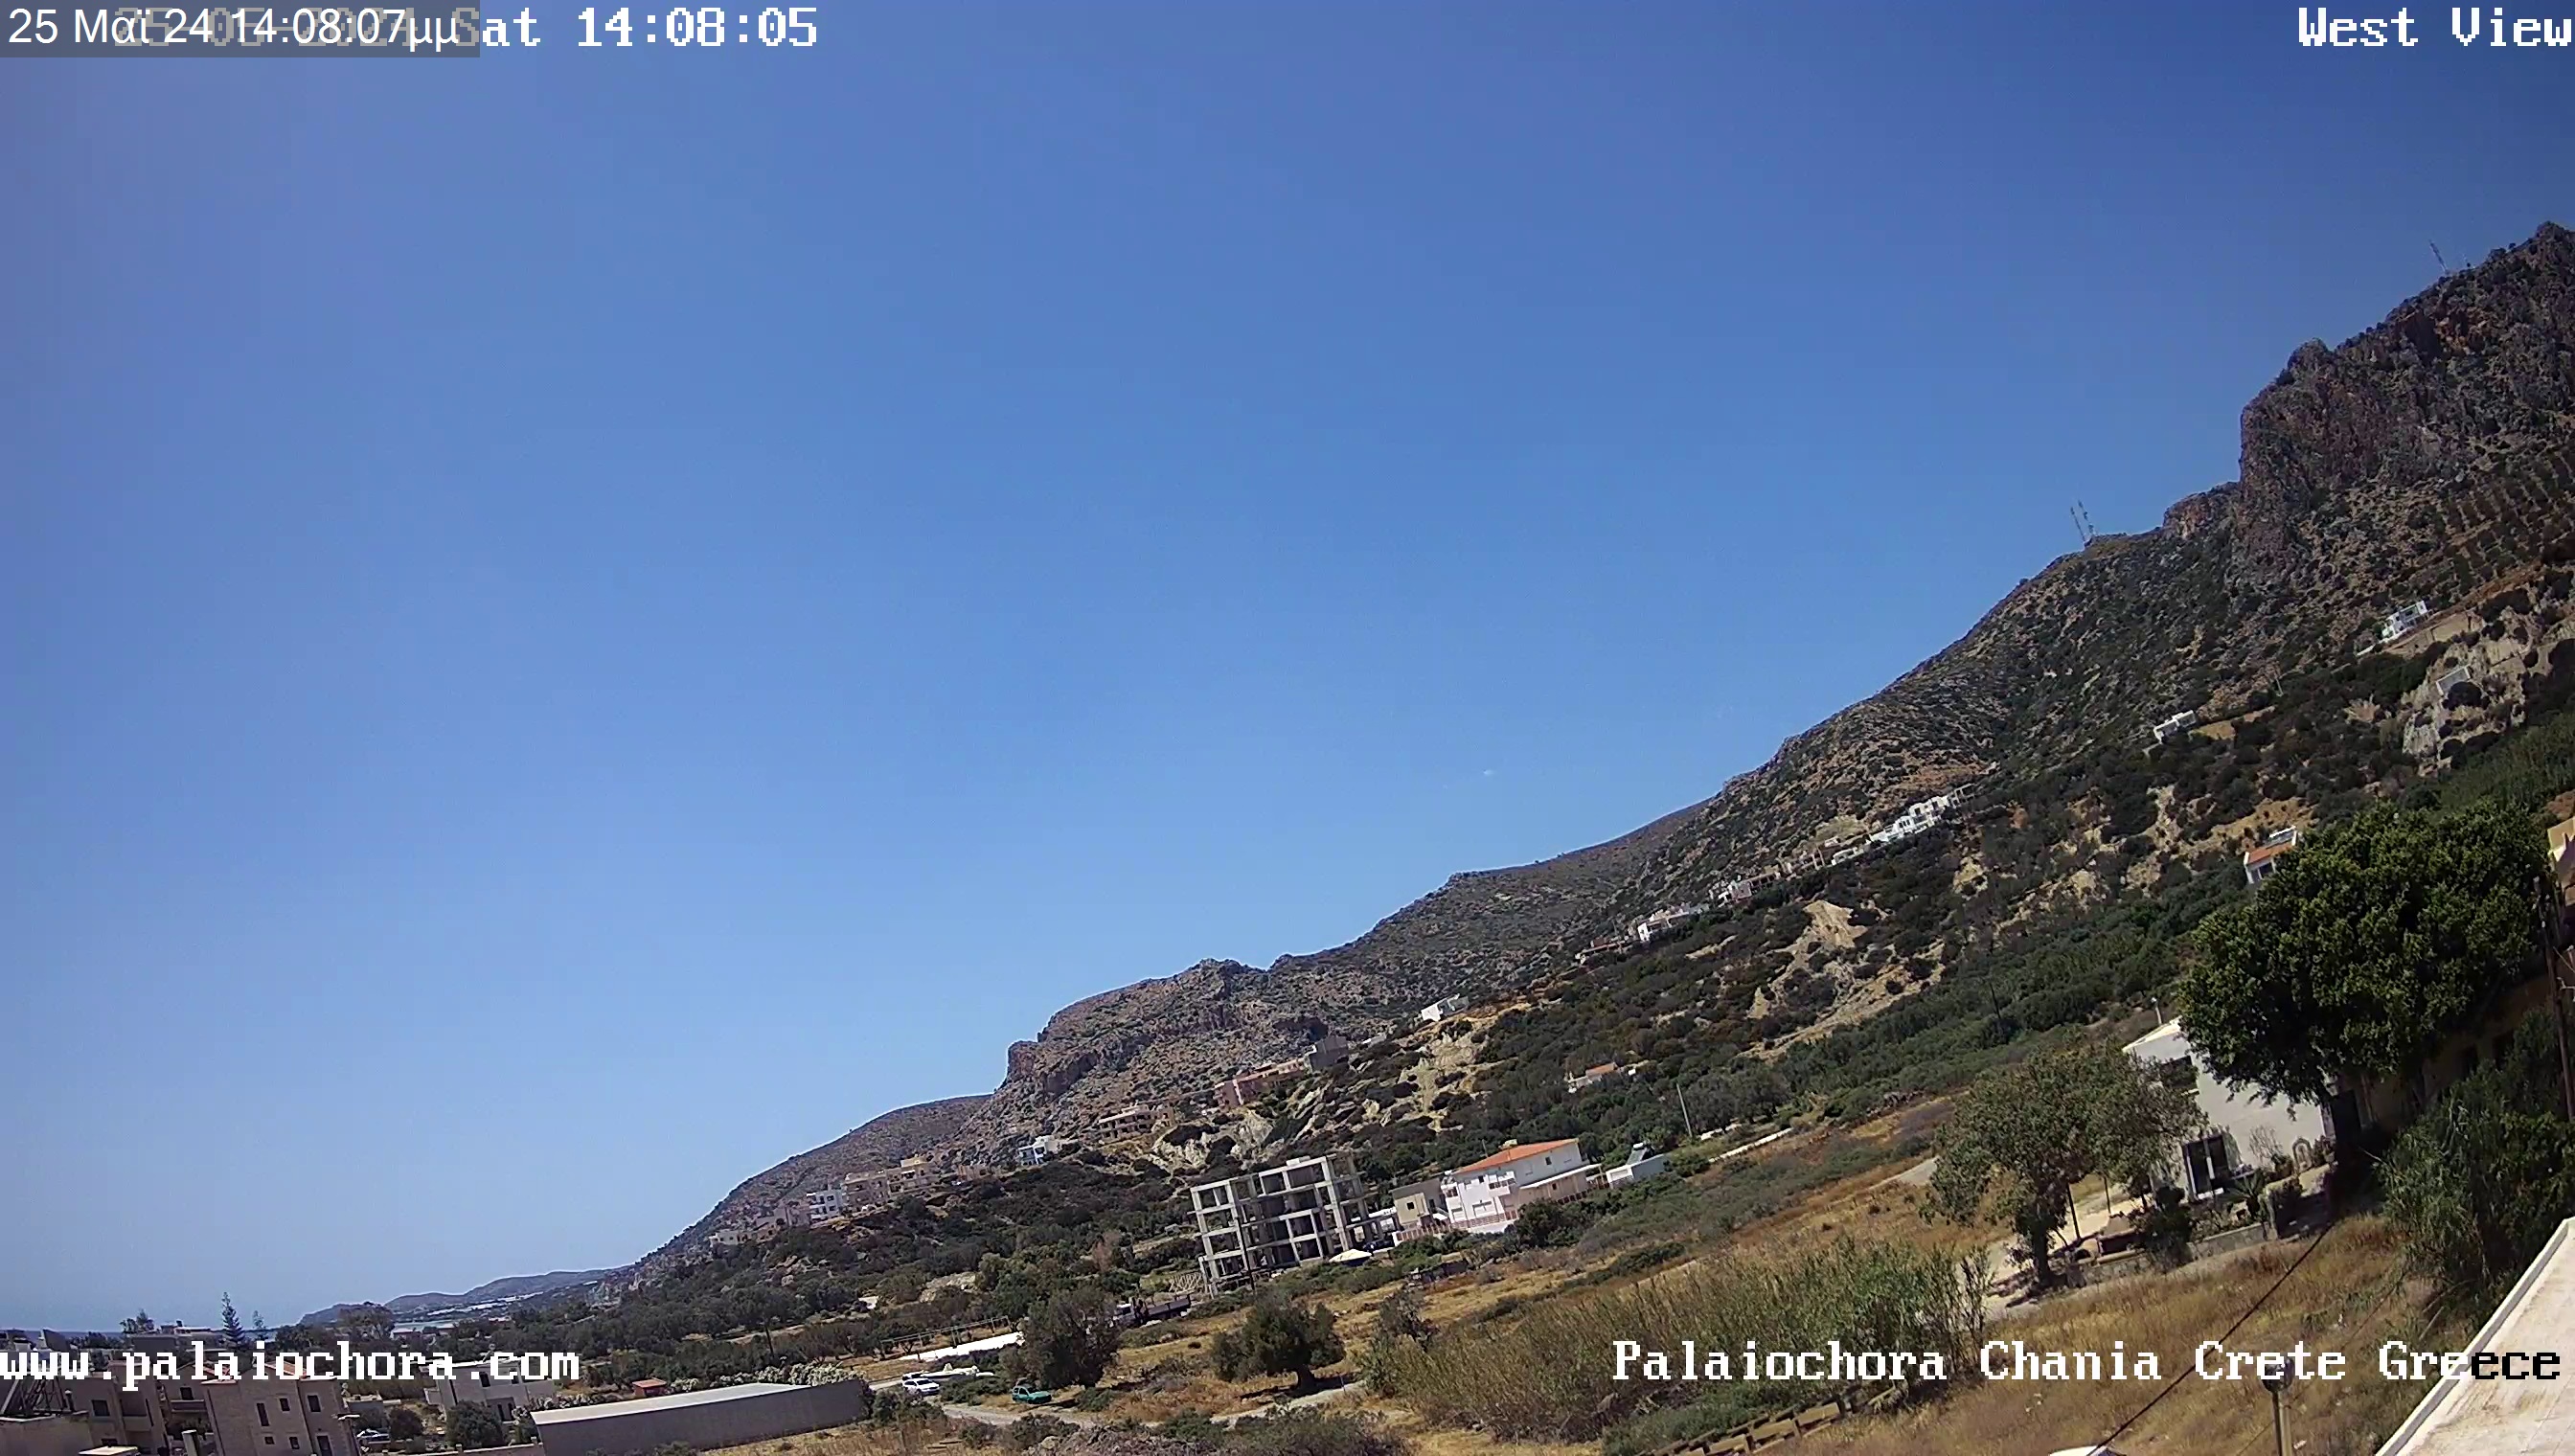 Paleocora (Creta) Vie. 14:08